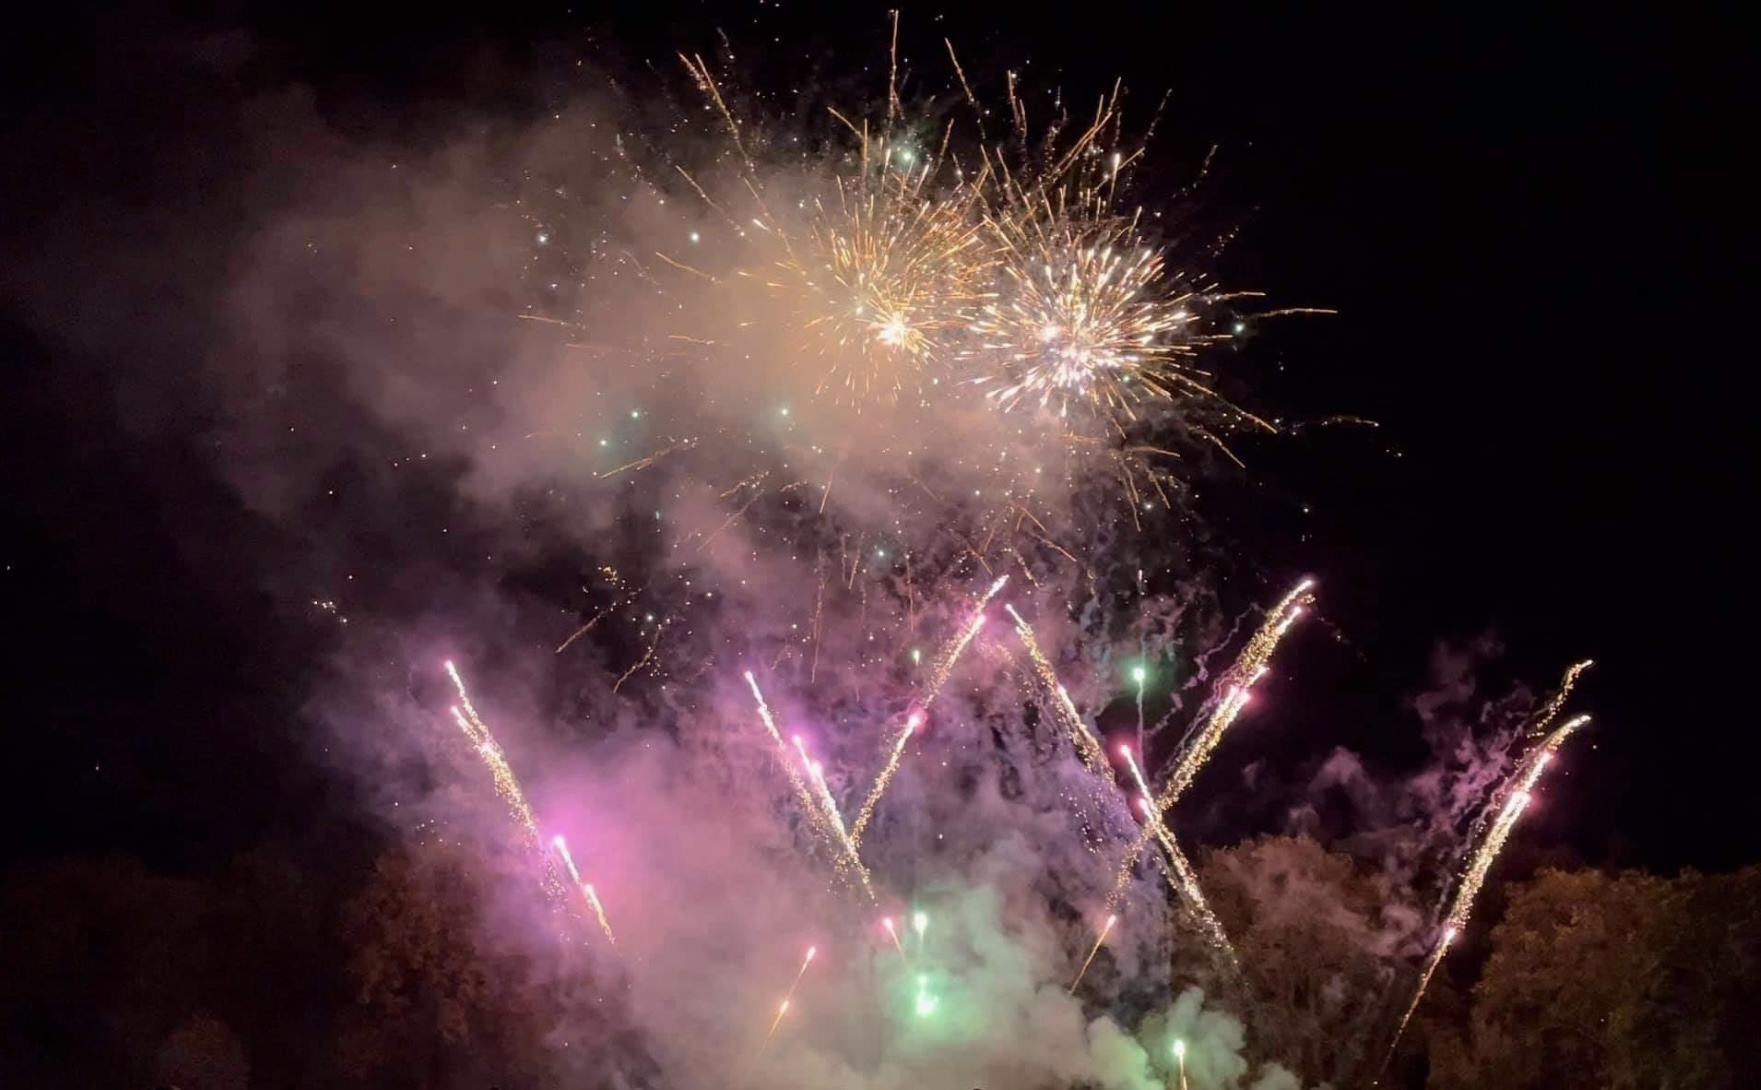 NEWS | Kington’s amazing fireworks show raises money for two fantastic charities